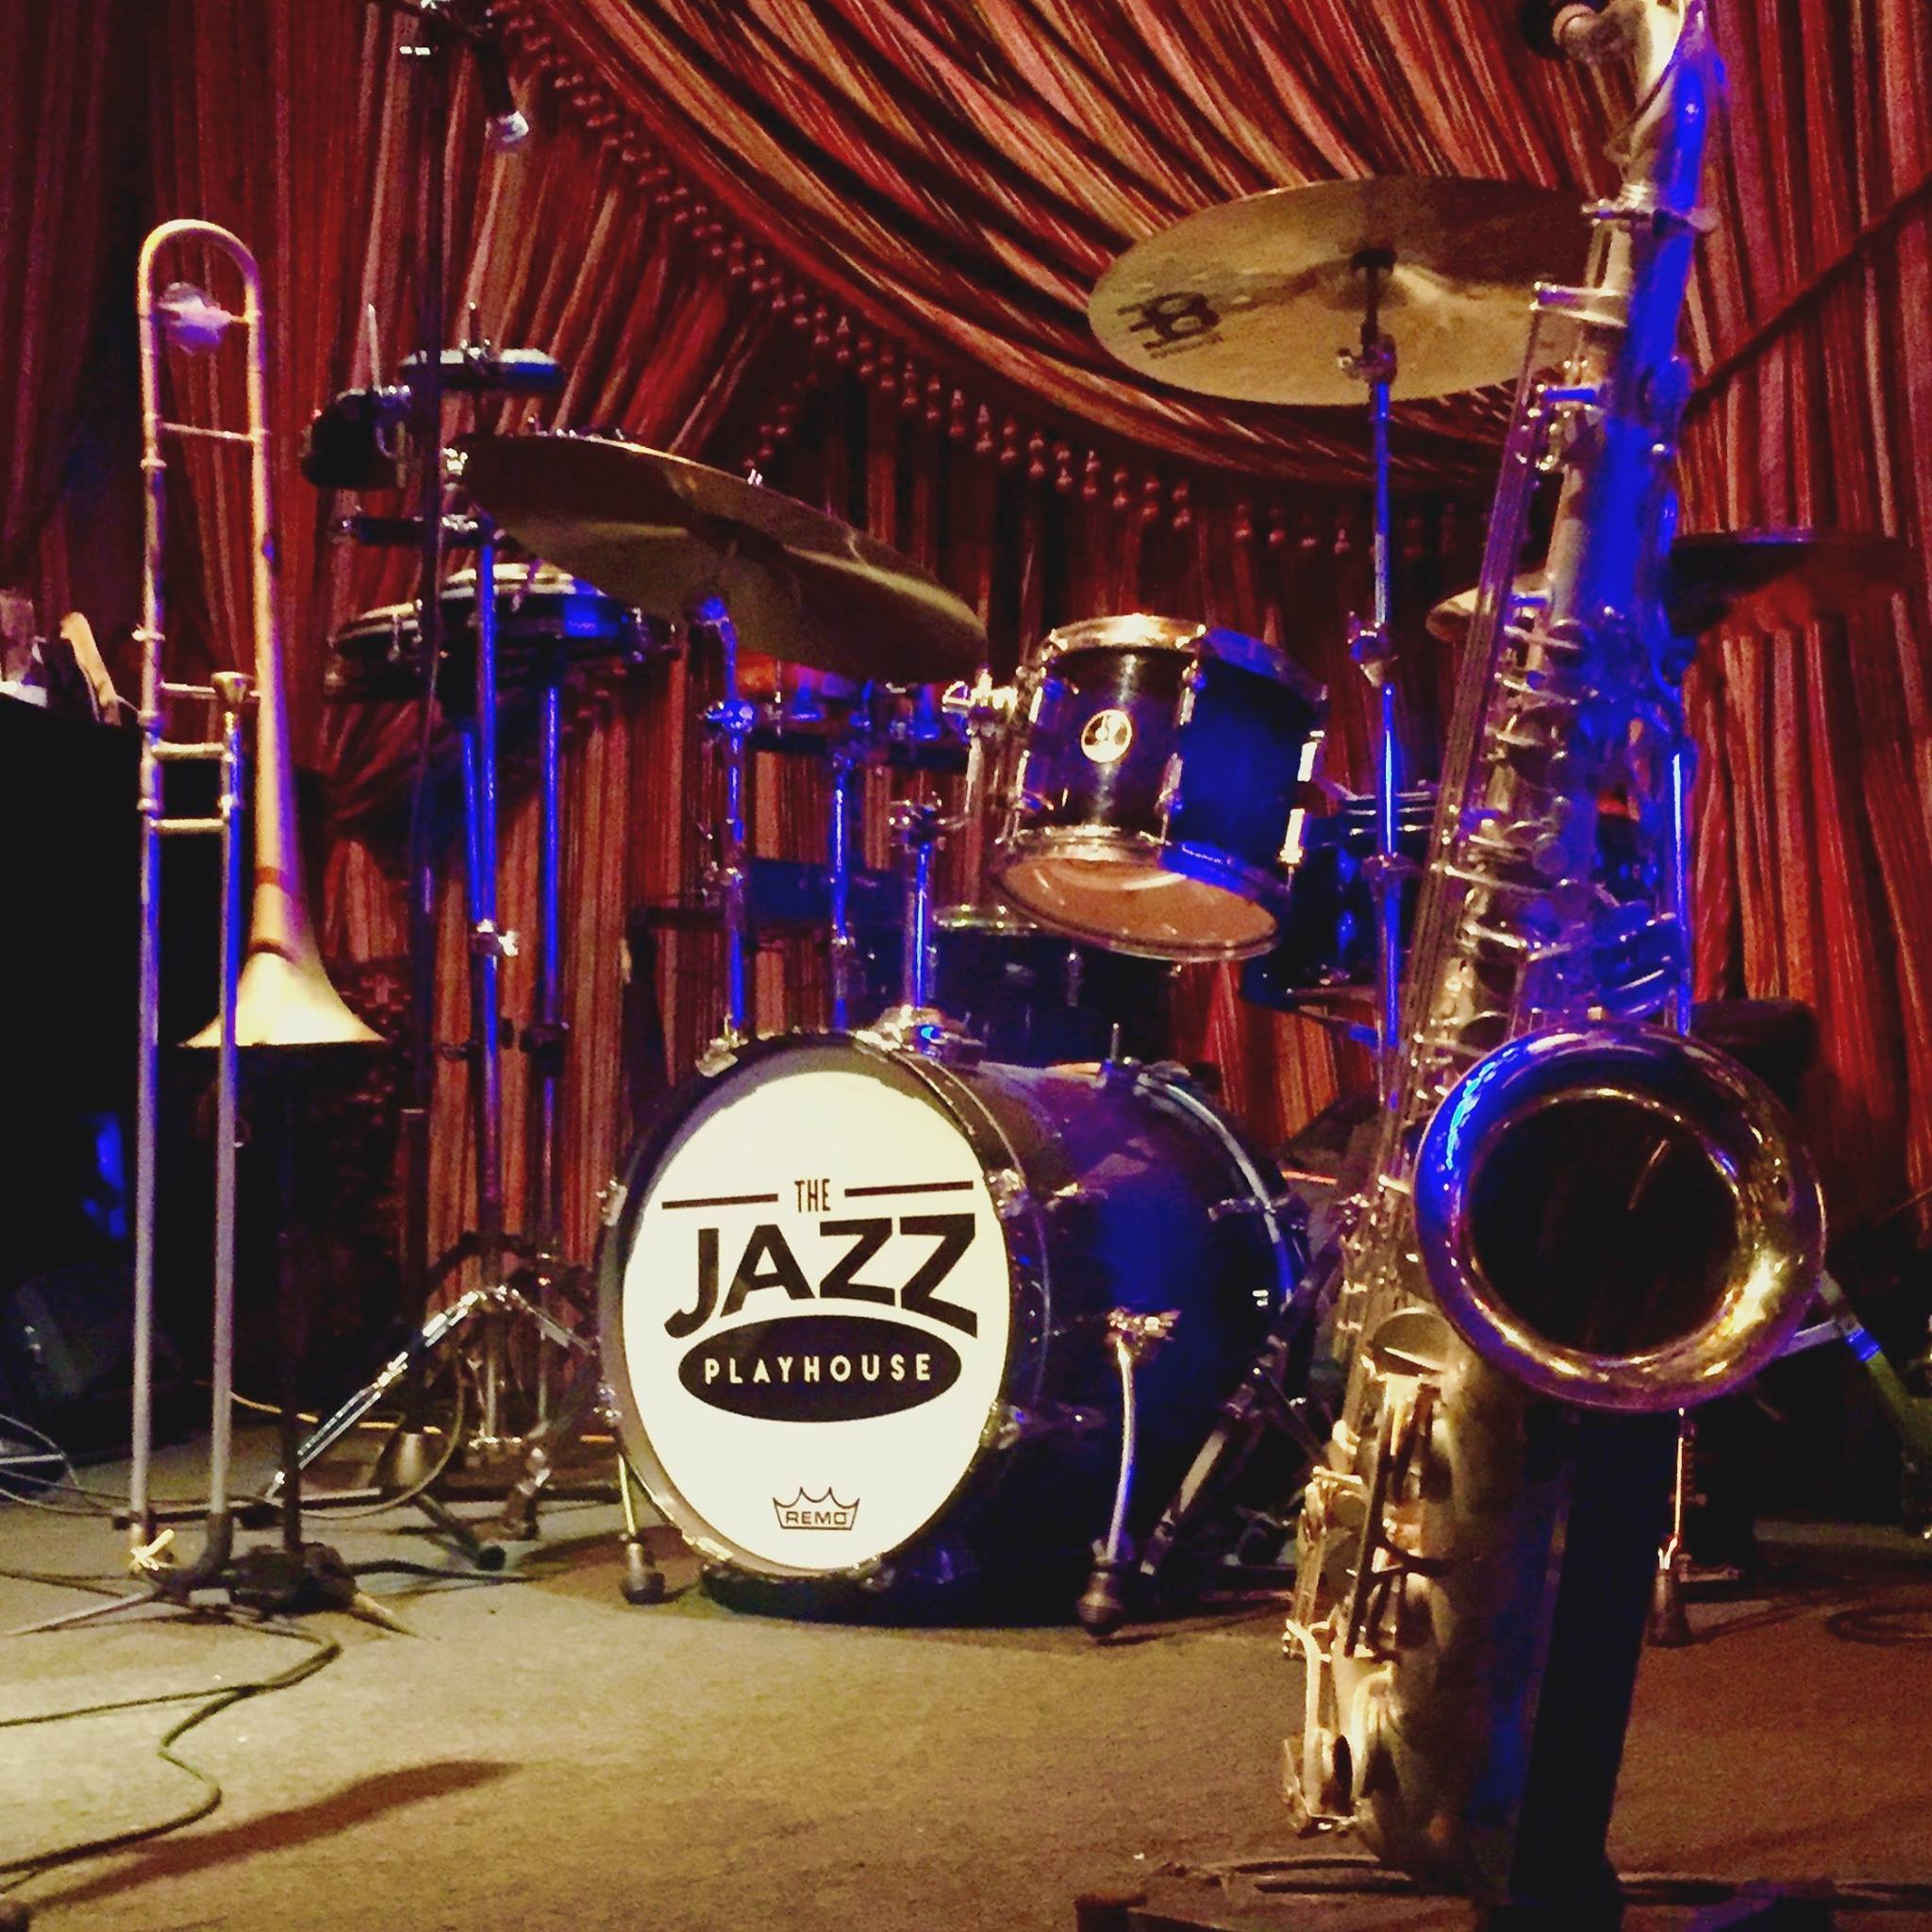 The Nayo Jones Experience at The Jazz Playhouse